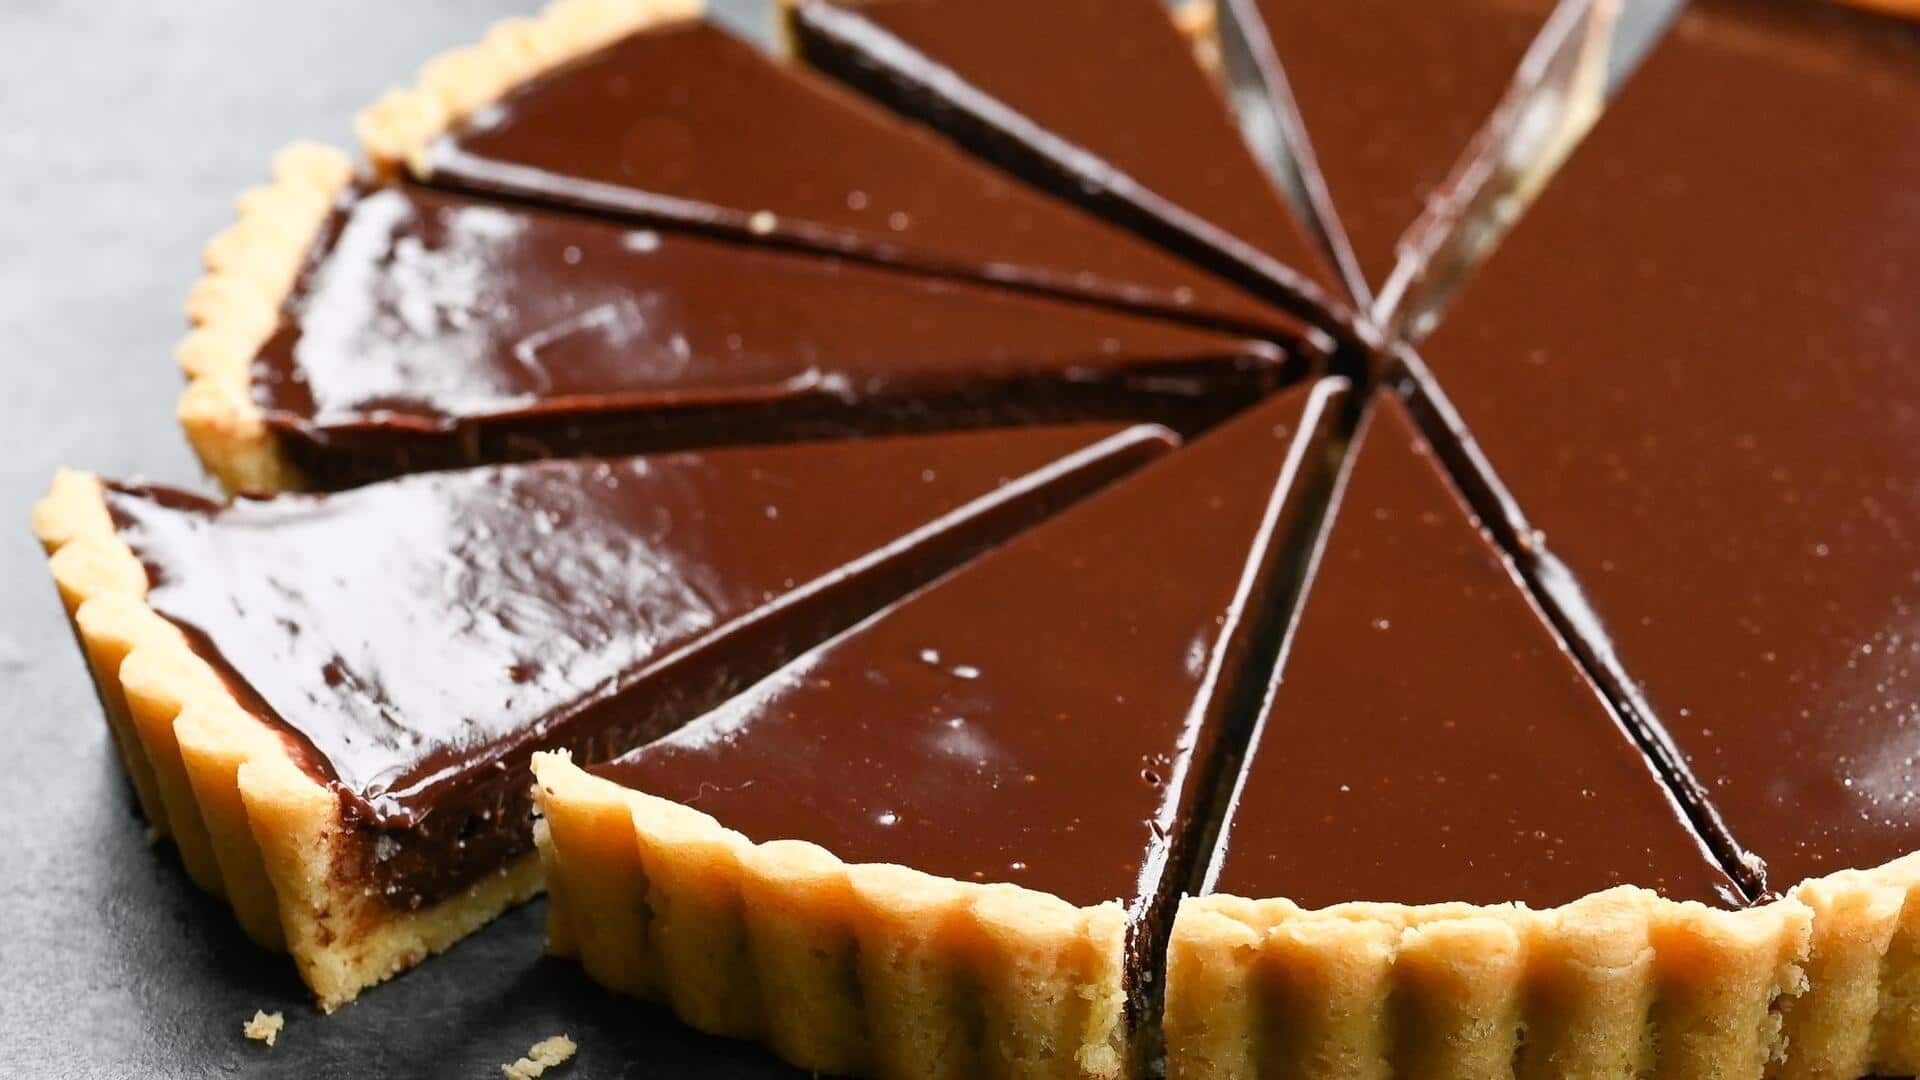 Check out this vegan chocolate tart recipe